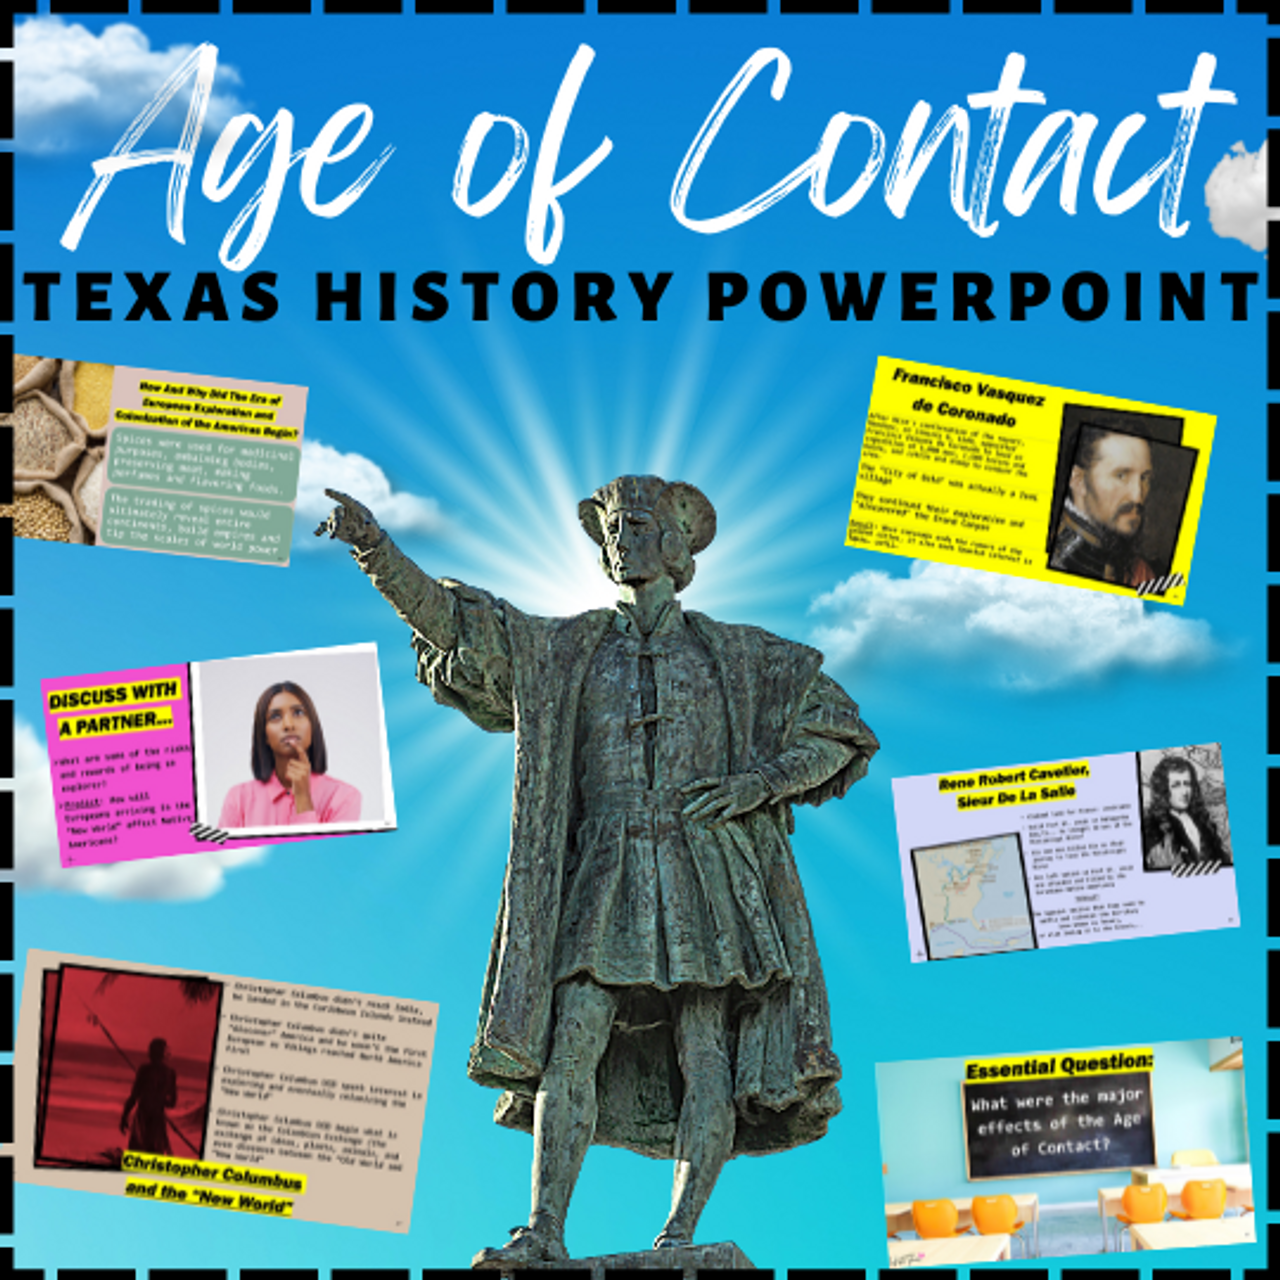 Man on Soap Box] - The Portal to Texas History